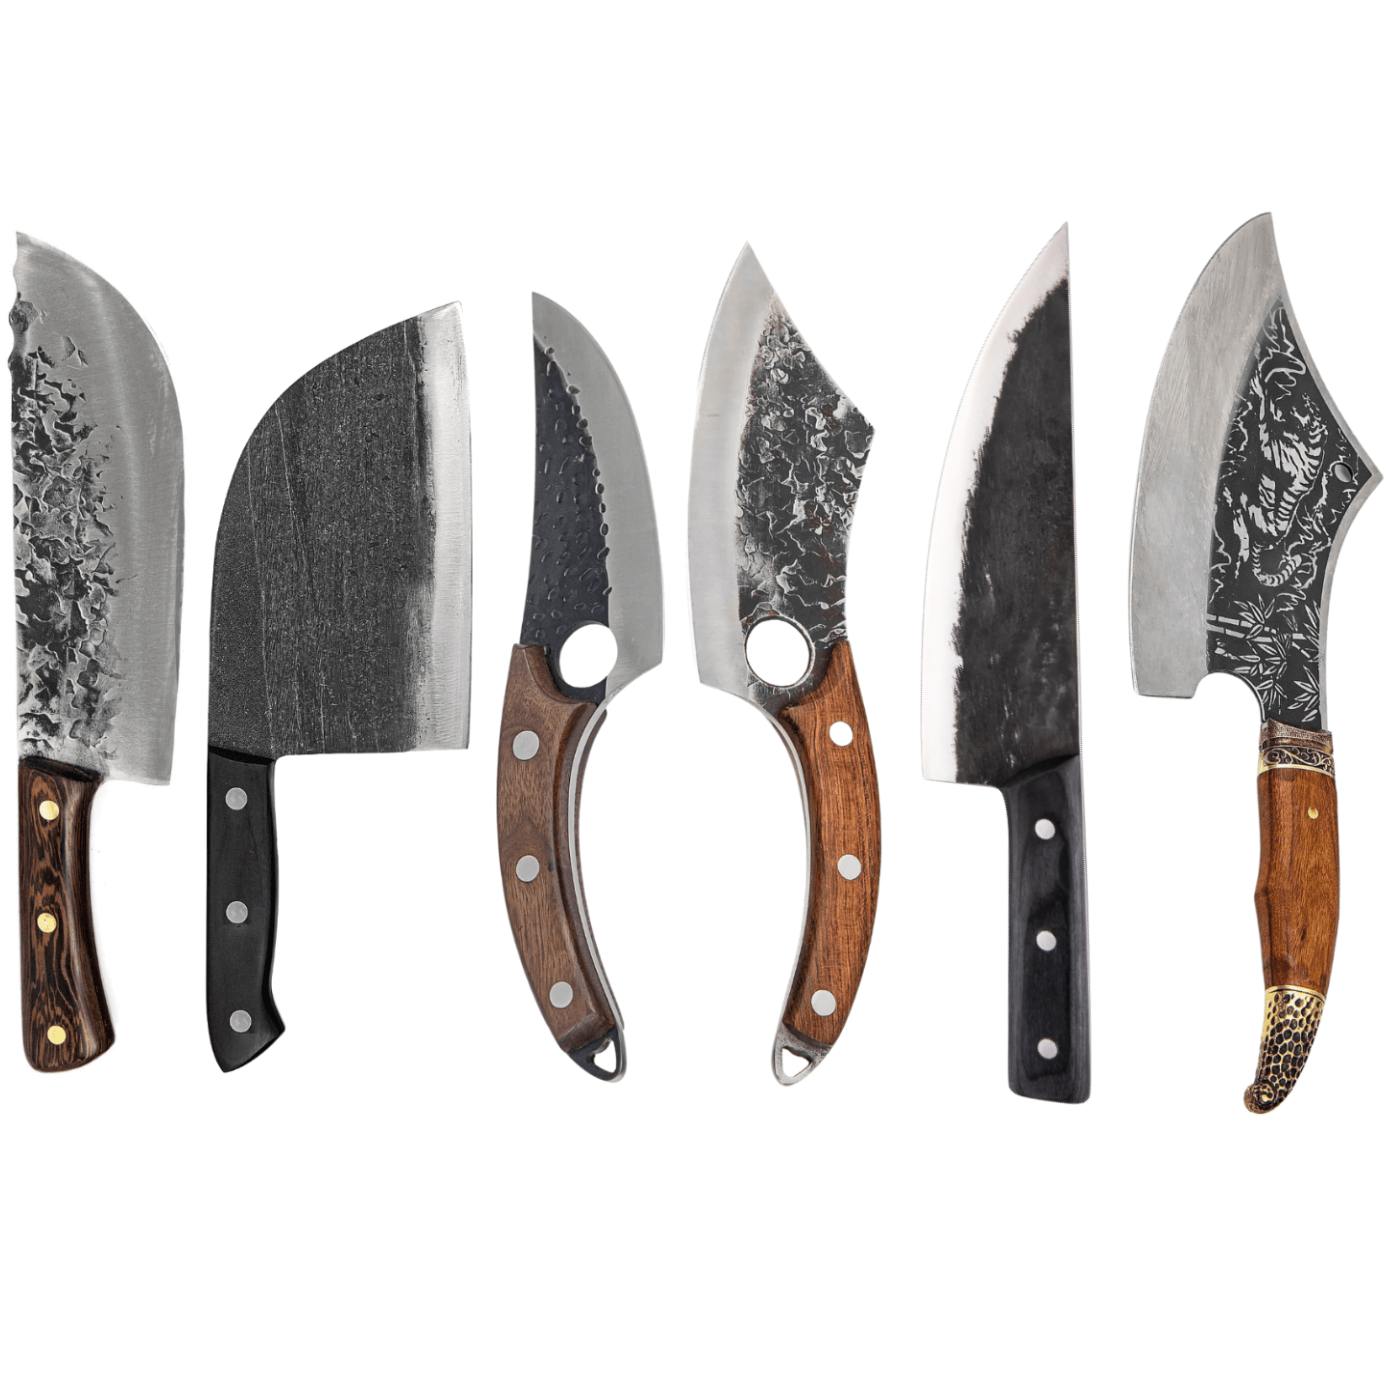 6-in-1 Caveman Bundle, consisting of various knives from seidos' caveman collection